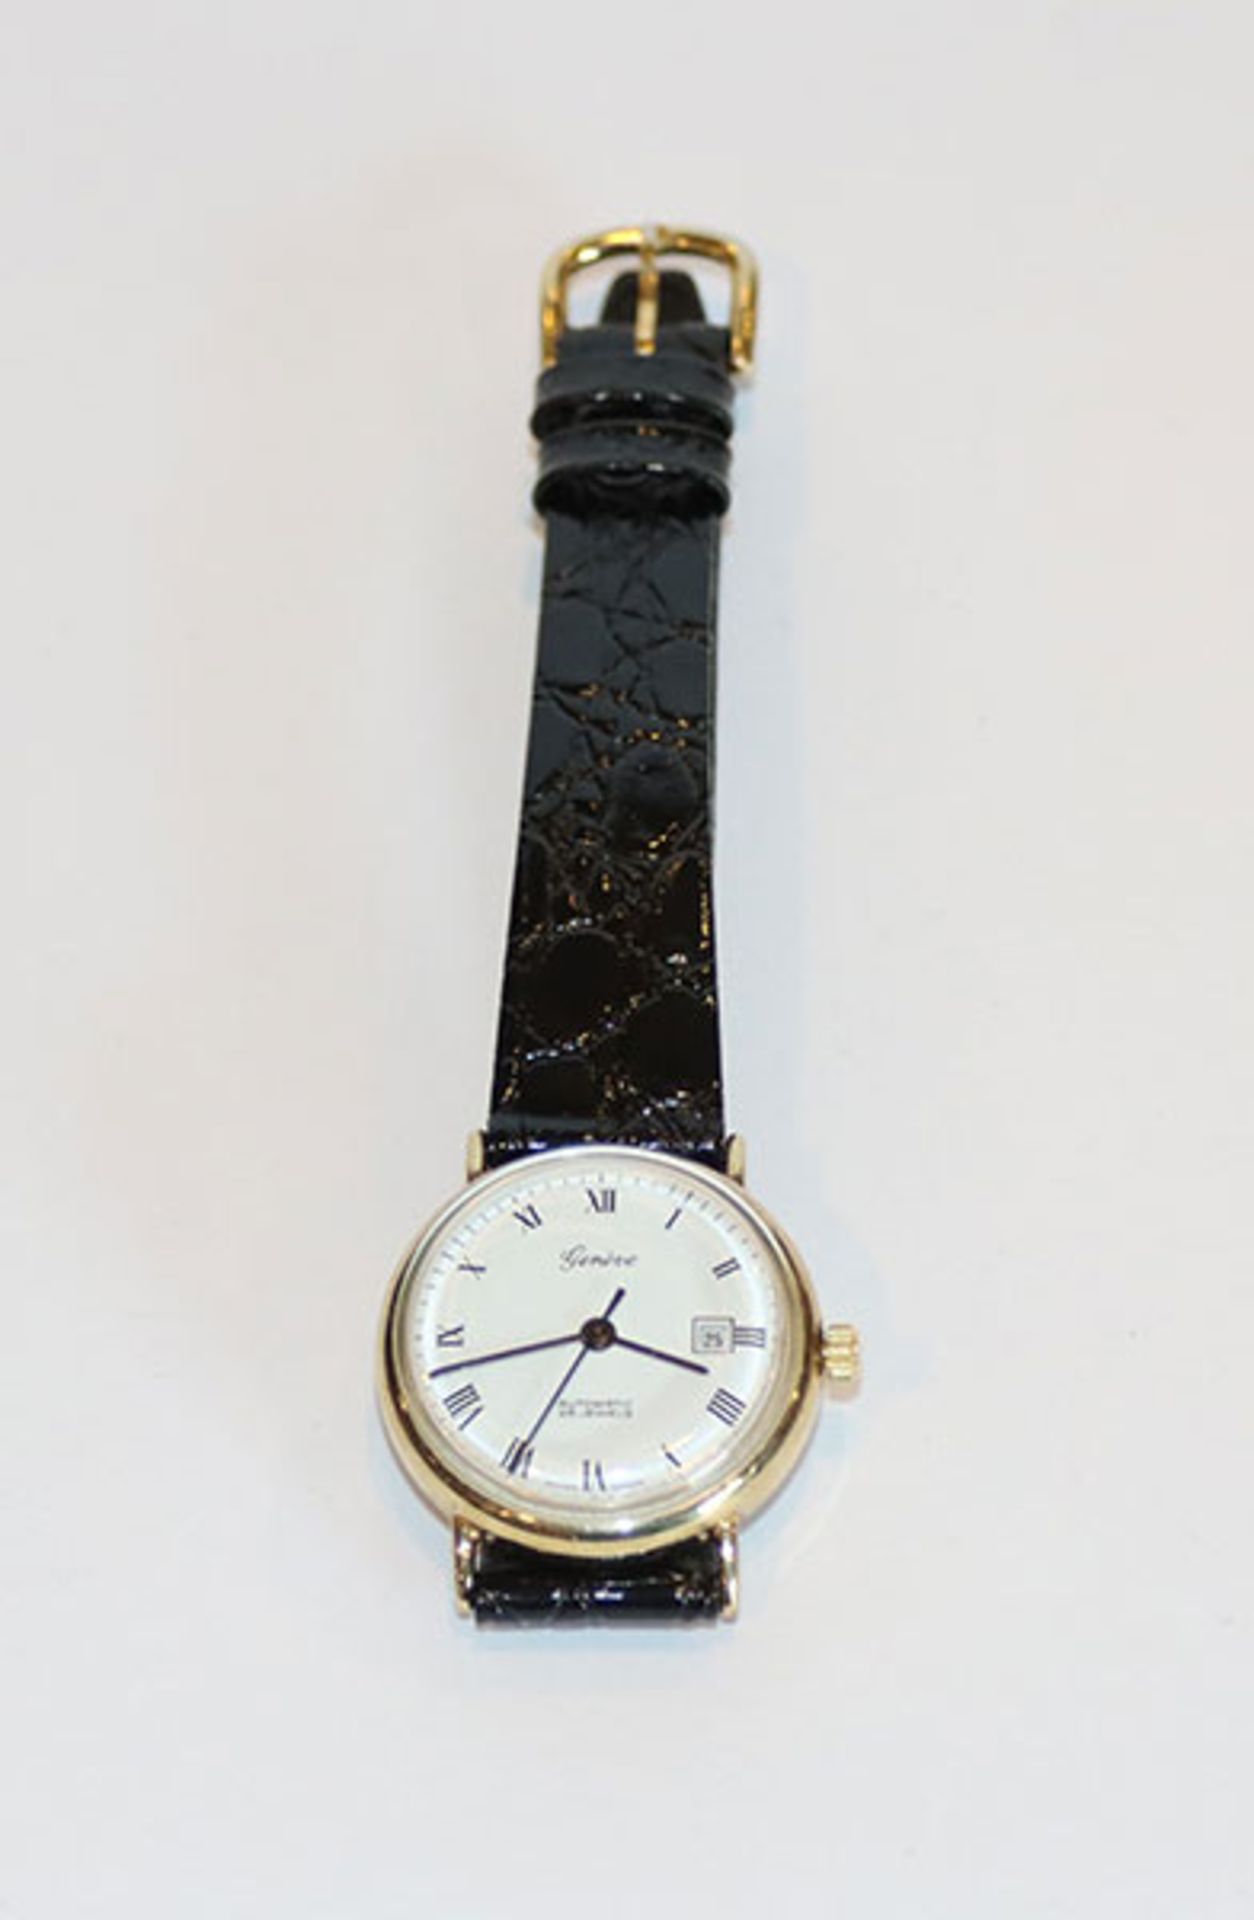 14 k Gelbgold Damen-Armbanduhr, Geneve, Automatic, an schwarzem Lederarmband, wenig getragen